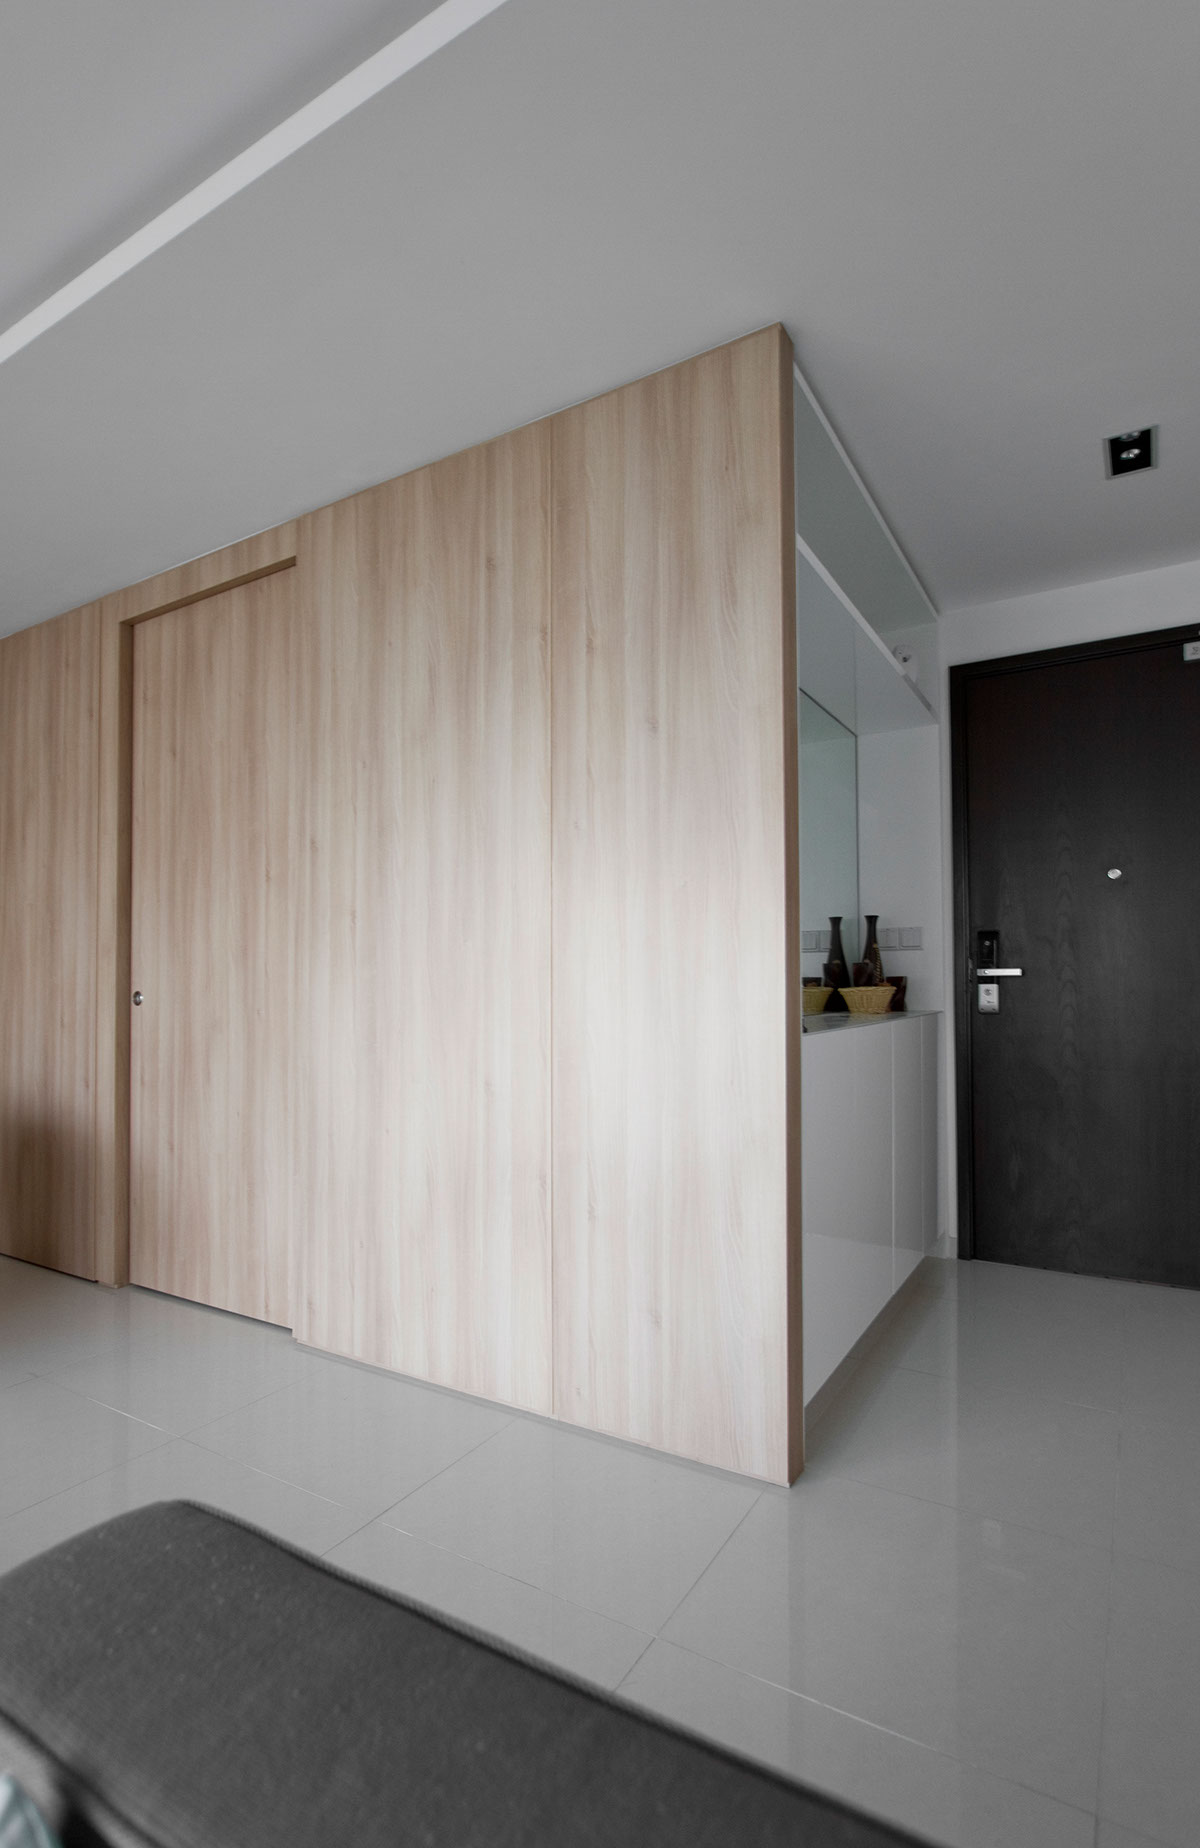 singapore apartment spaces contemporary minimalist modern living Alvin Oh living room bedroom Interior design lounge